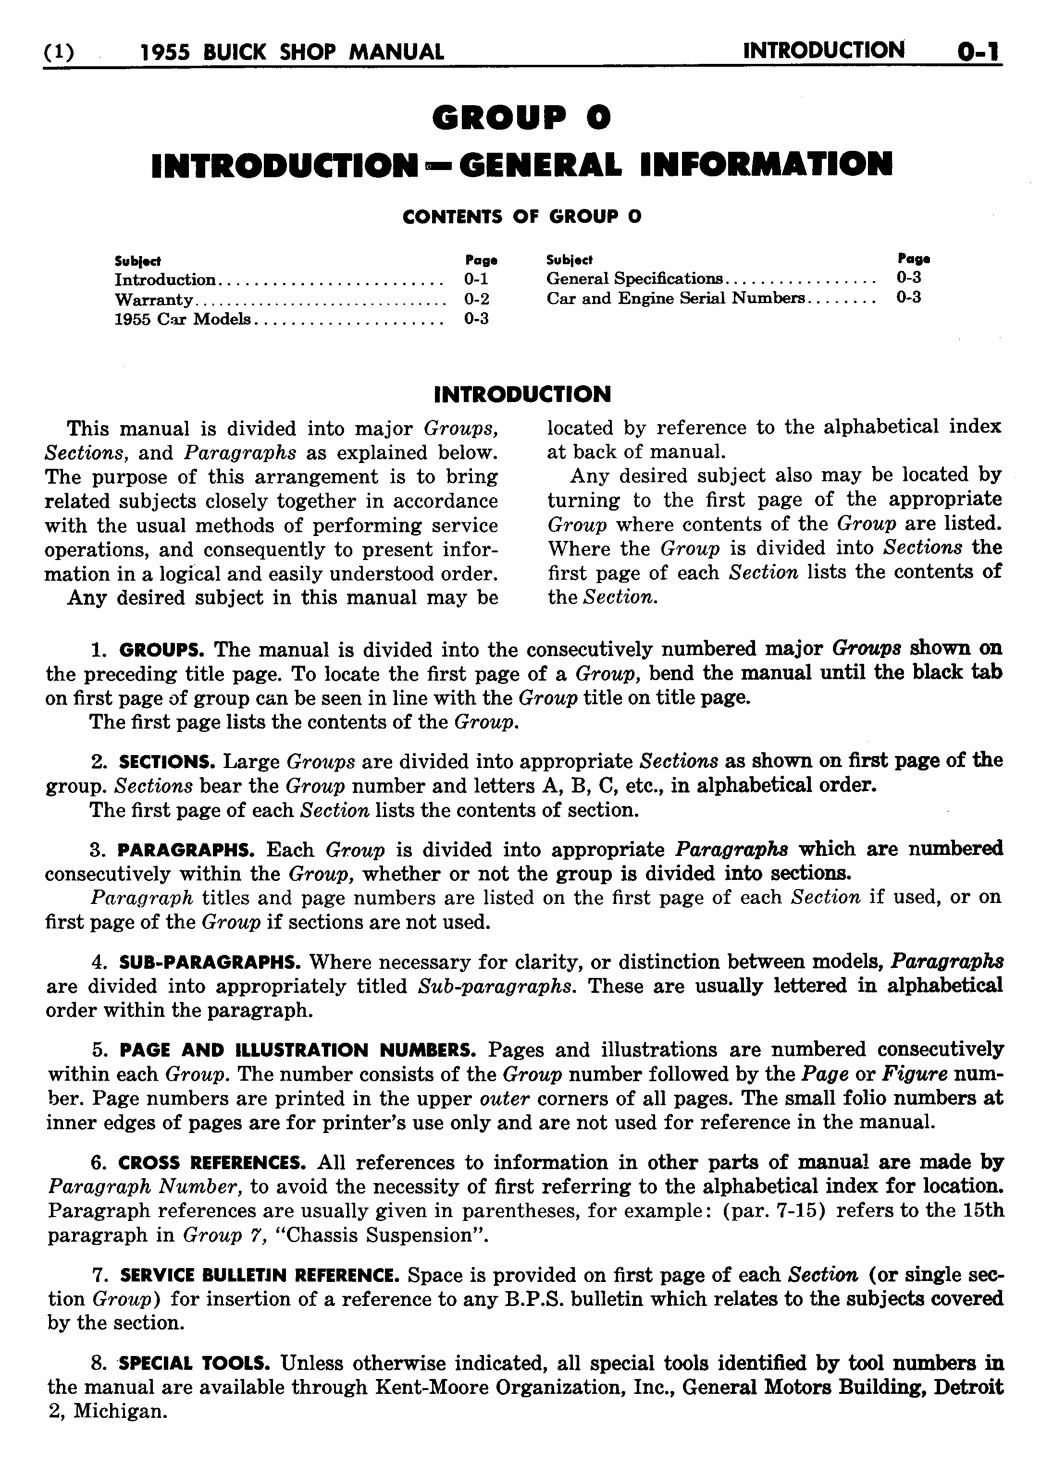 n_01 1955 Buick Shop Manual - Gen Information-003-003.jpg